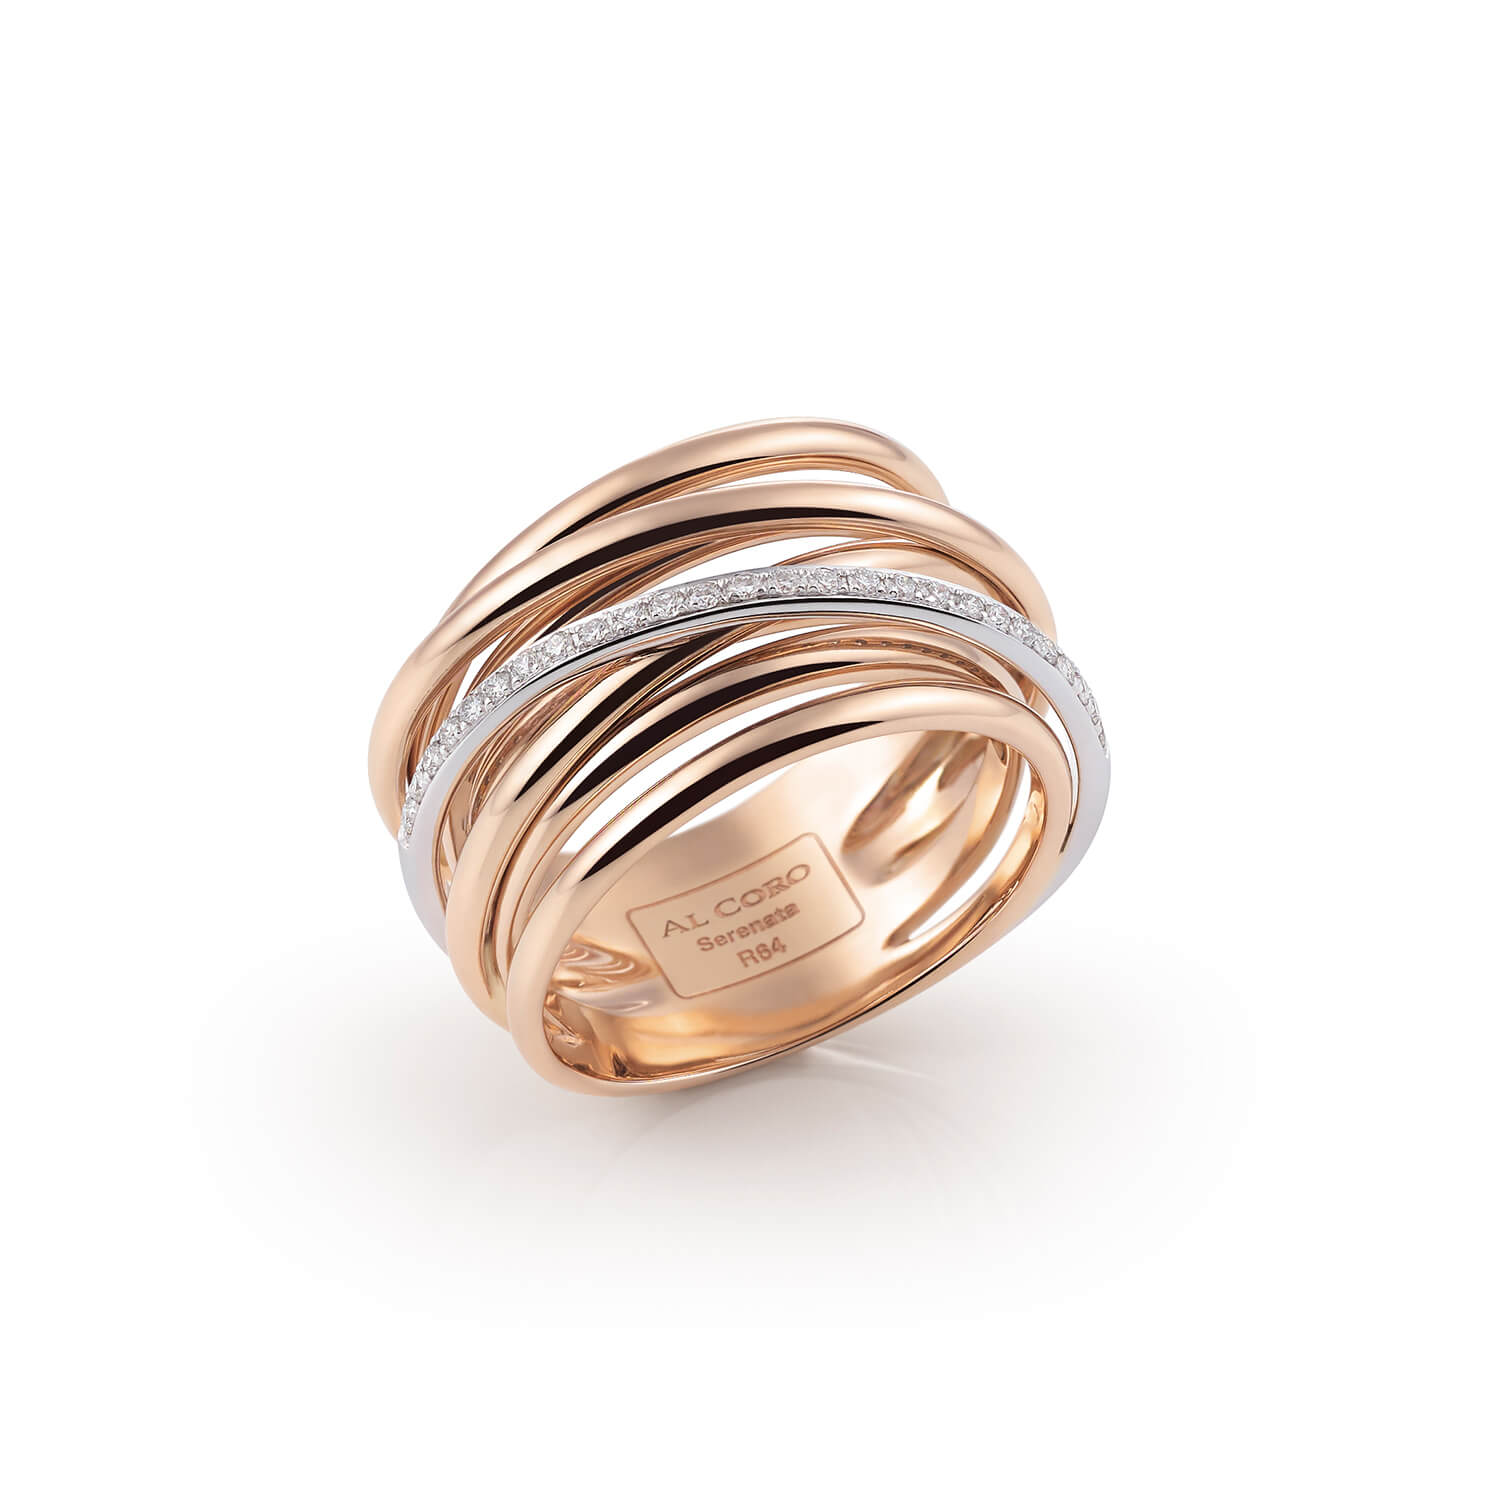 Al Coro Serenta R64 Ring in 18k Rose Gold with Diamonds - Orsini Jewellers NZ